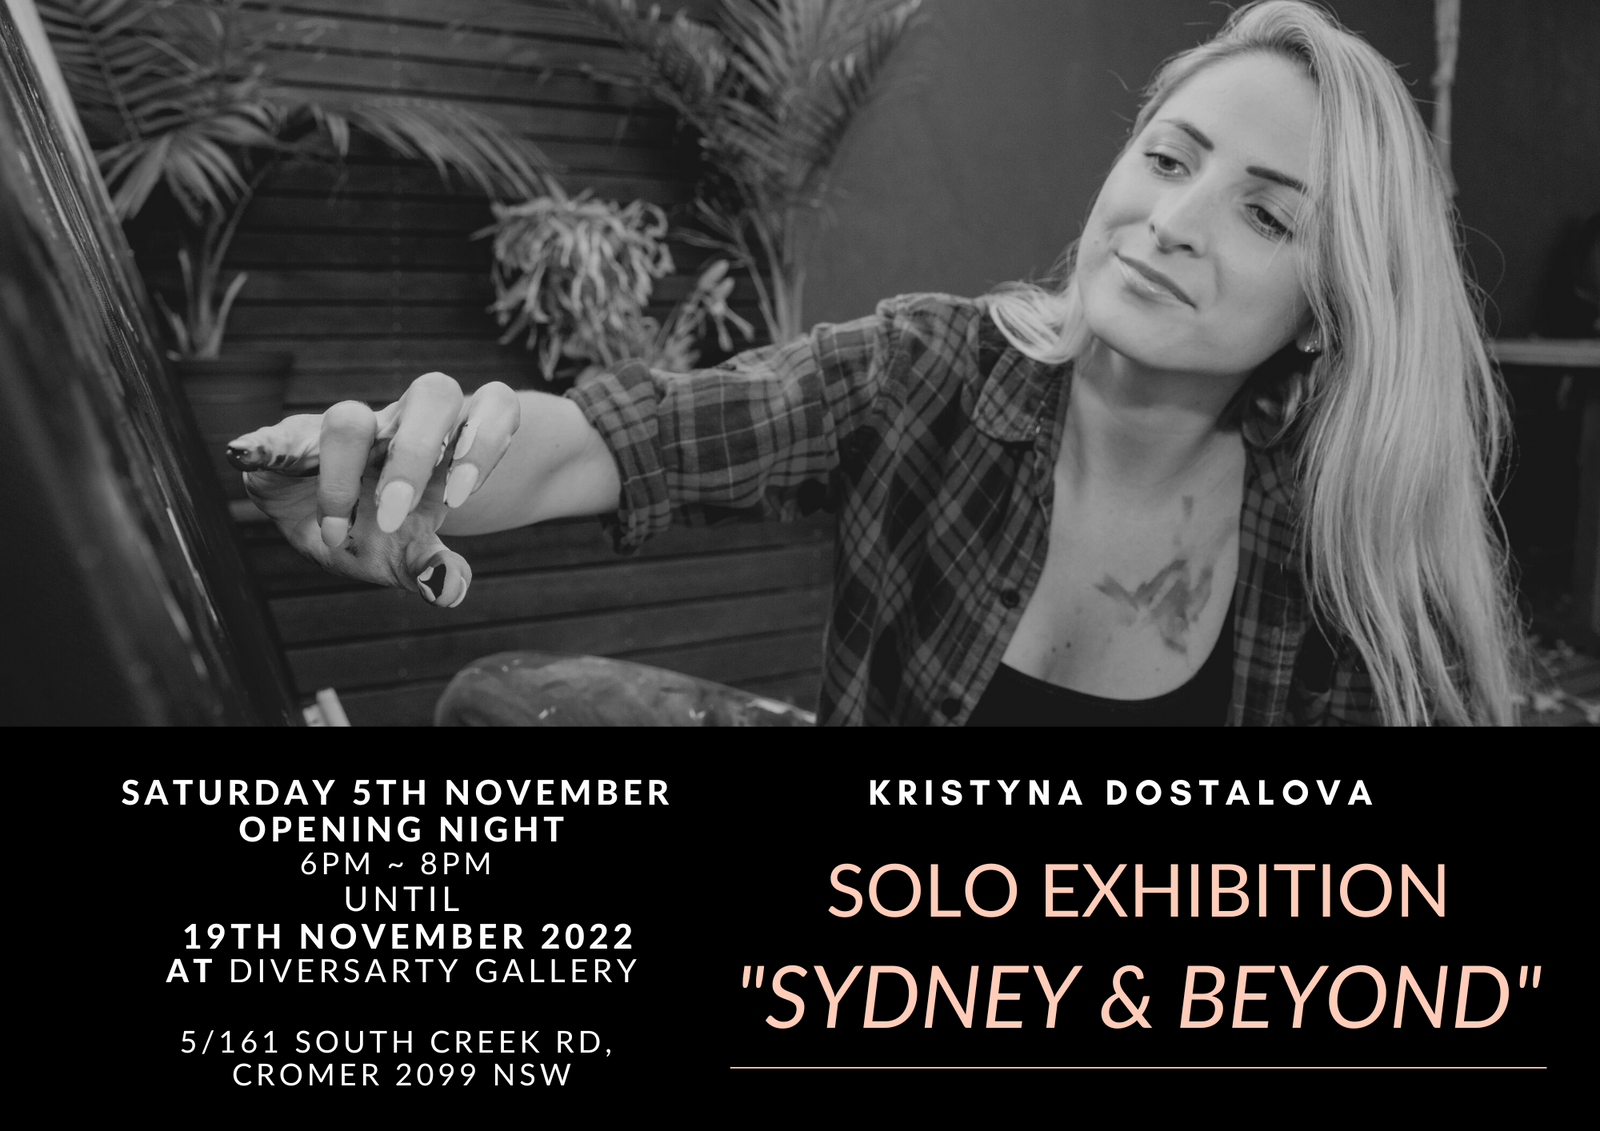 Solo Exhibition "Sydney & Beyond"